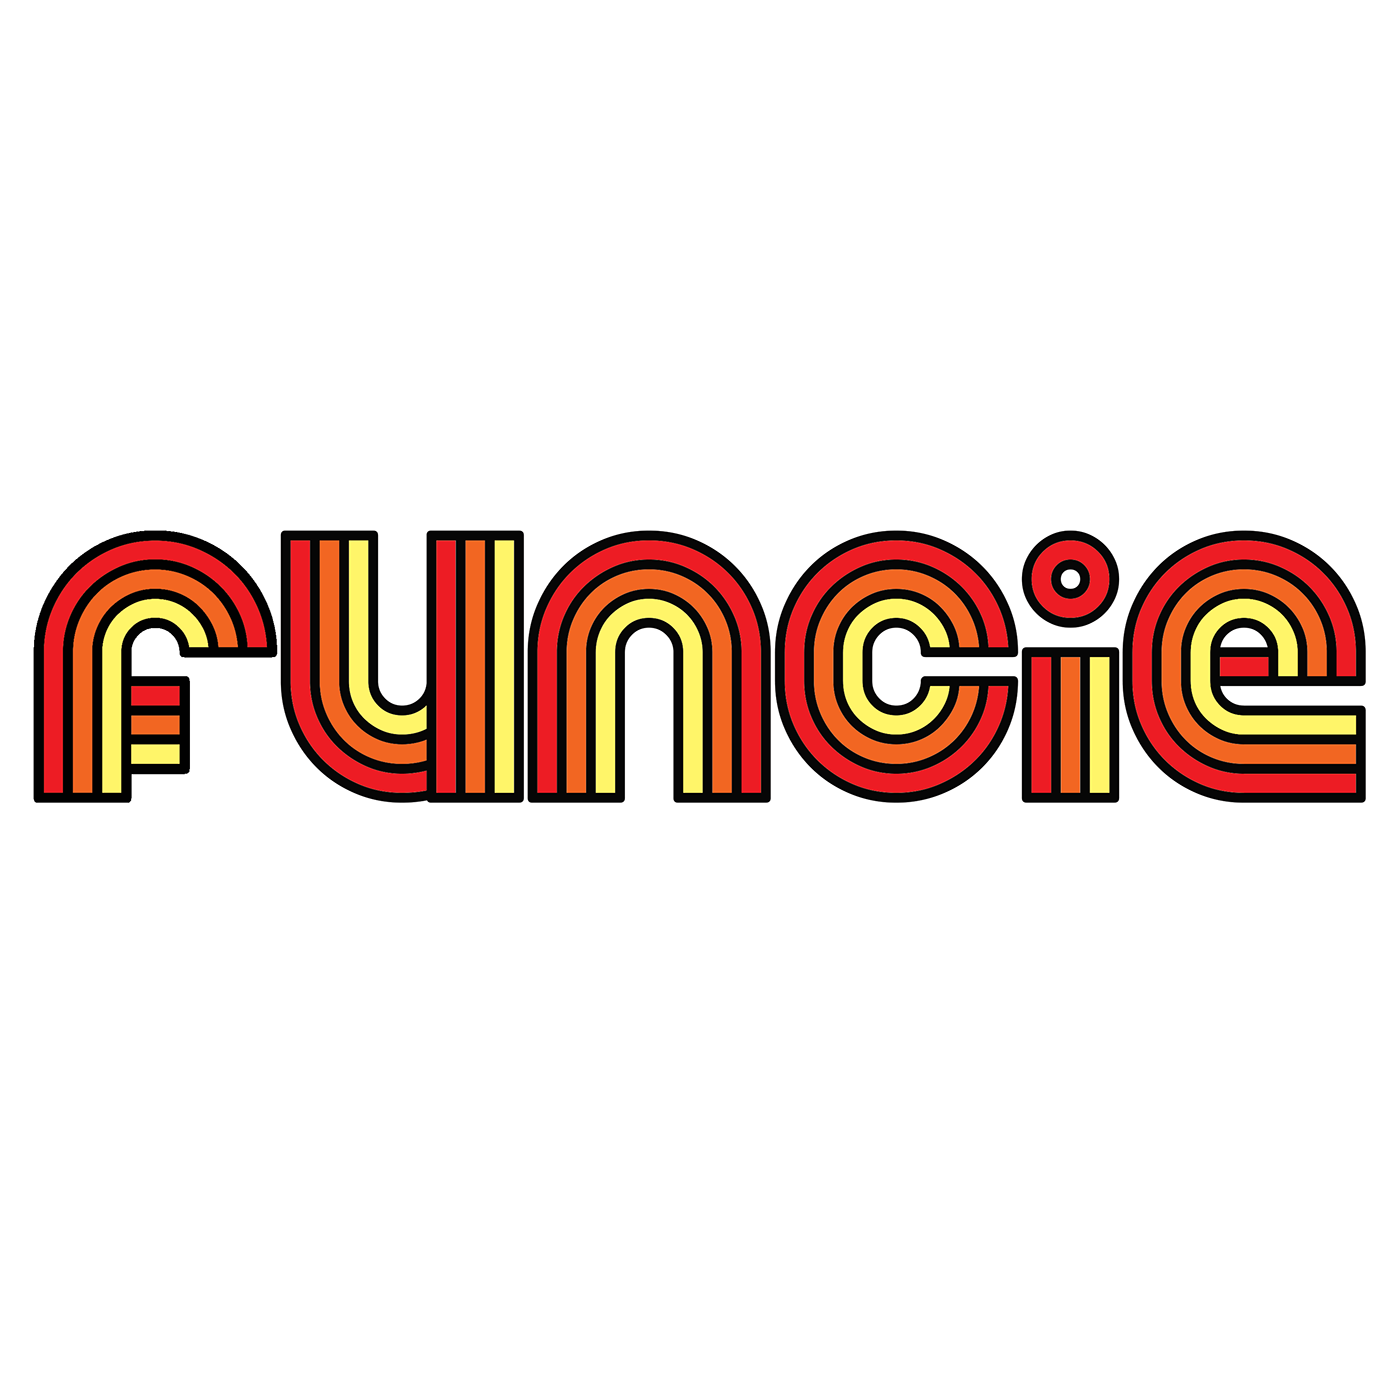 funcie Muncie BALLSTATE Hoosier indiana branding  merchandise patch logo tshirt